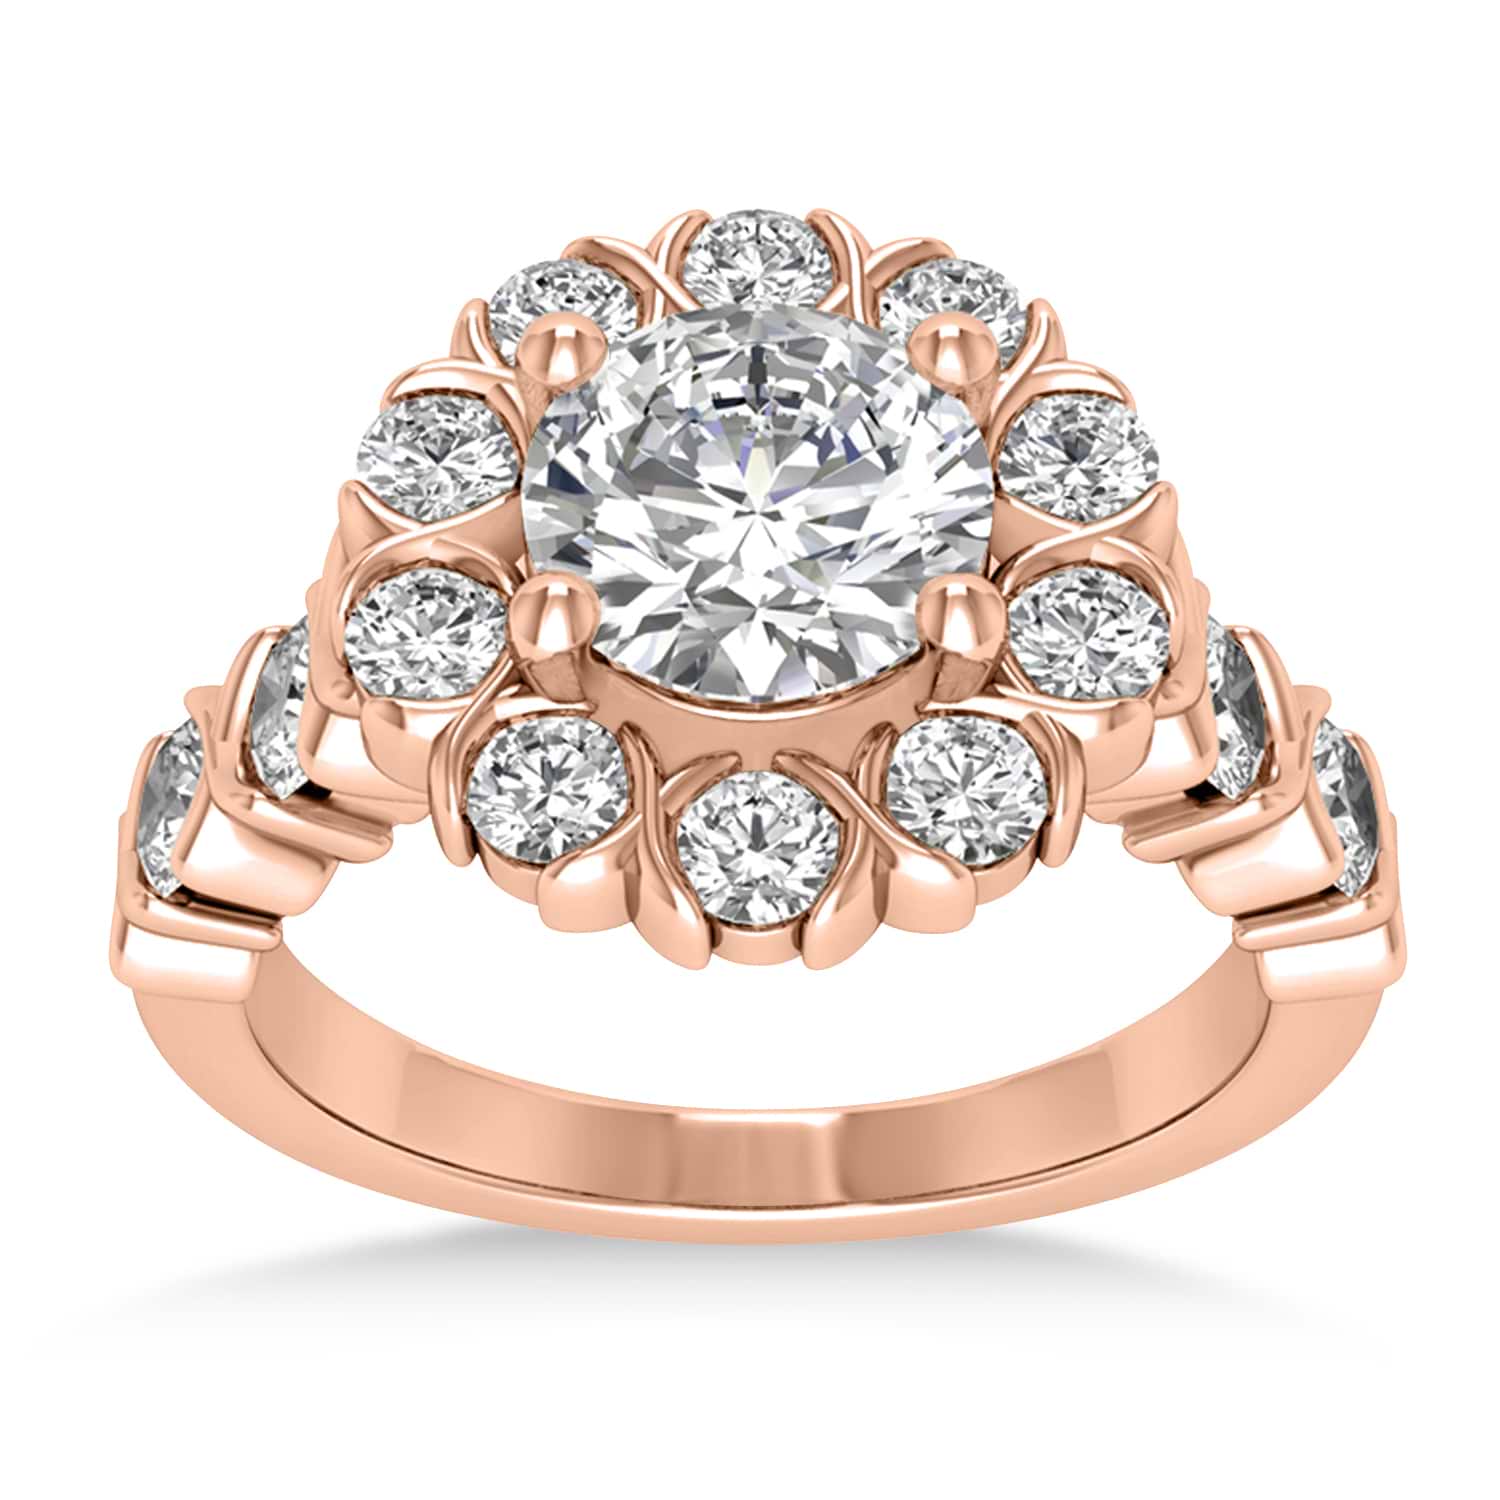 Diamond Petal Styled Engagement Ring 14k Rose Gold (1.00ct)